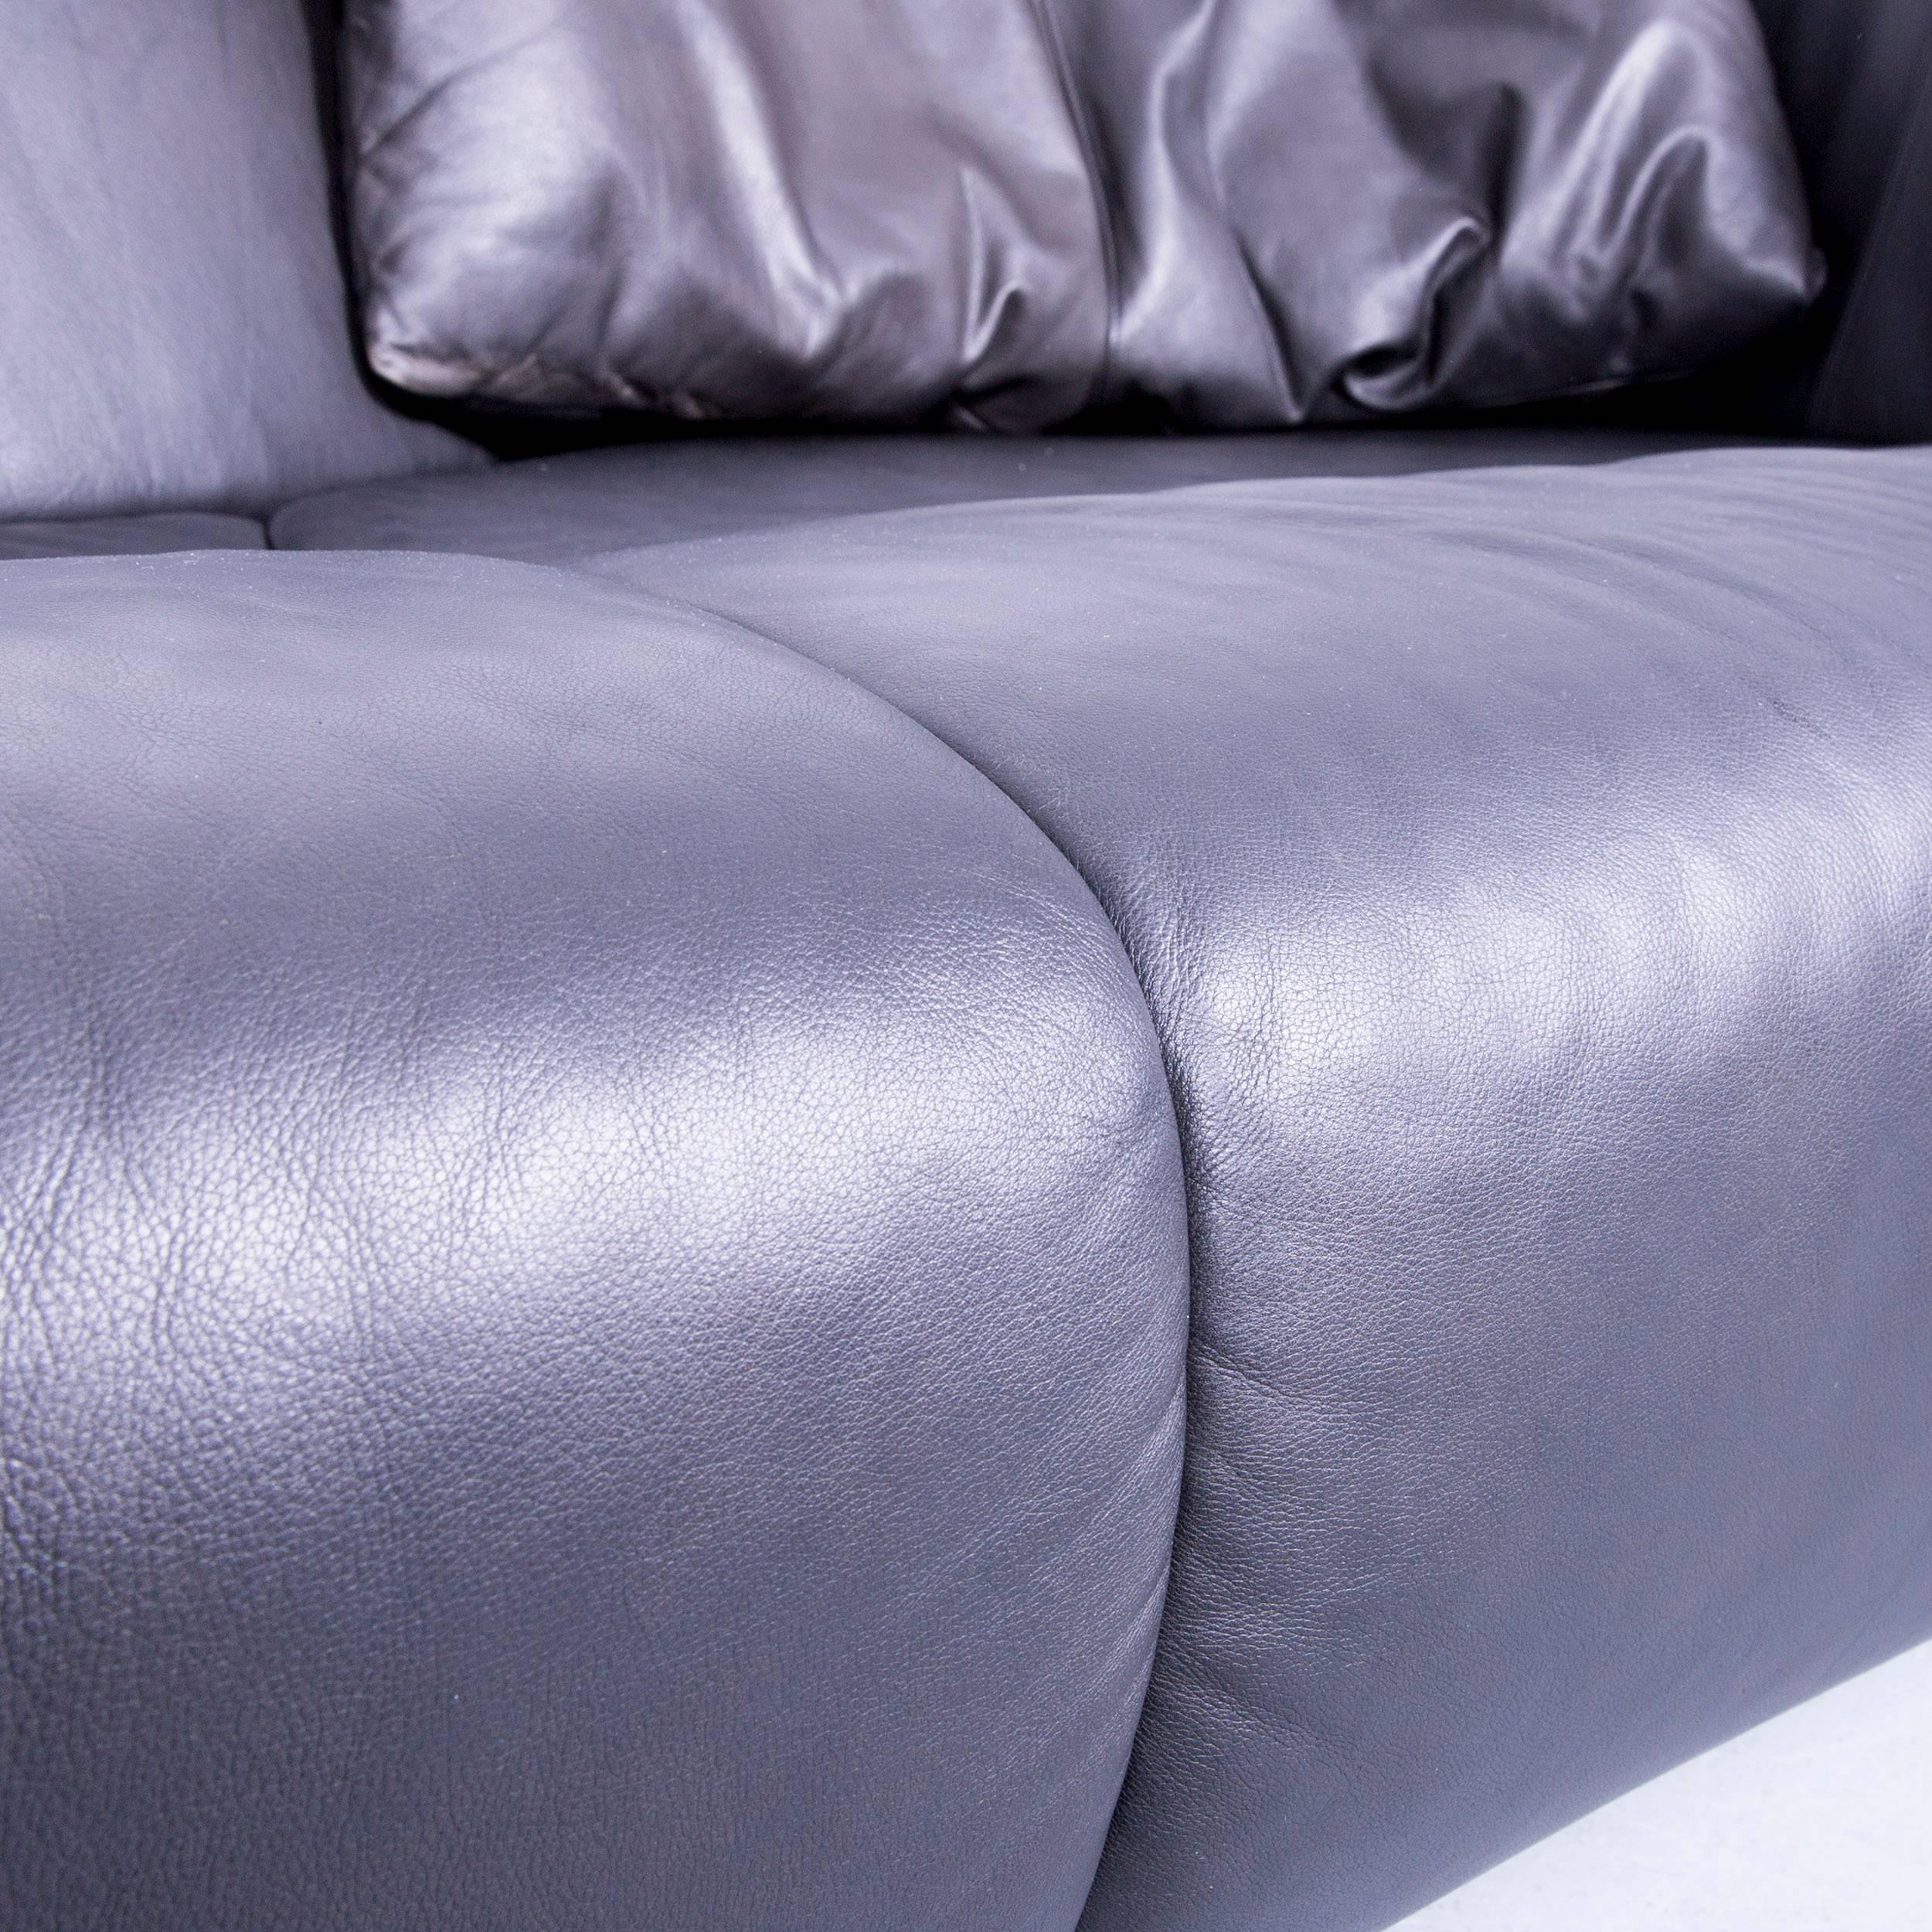 de Sede DS-102 Designer Sofa Leather Black Three-Seat Couch Matthias Hoffmann 1